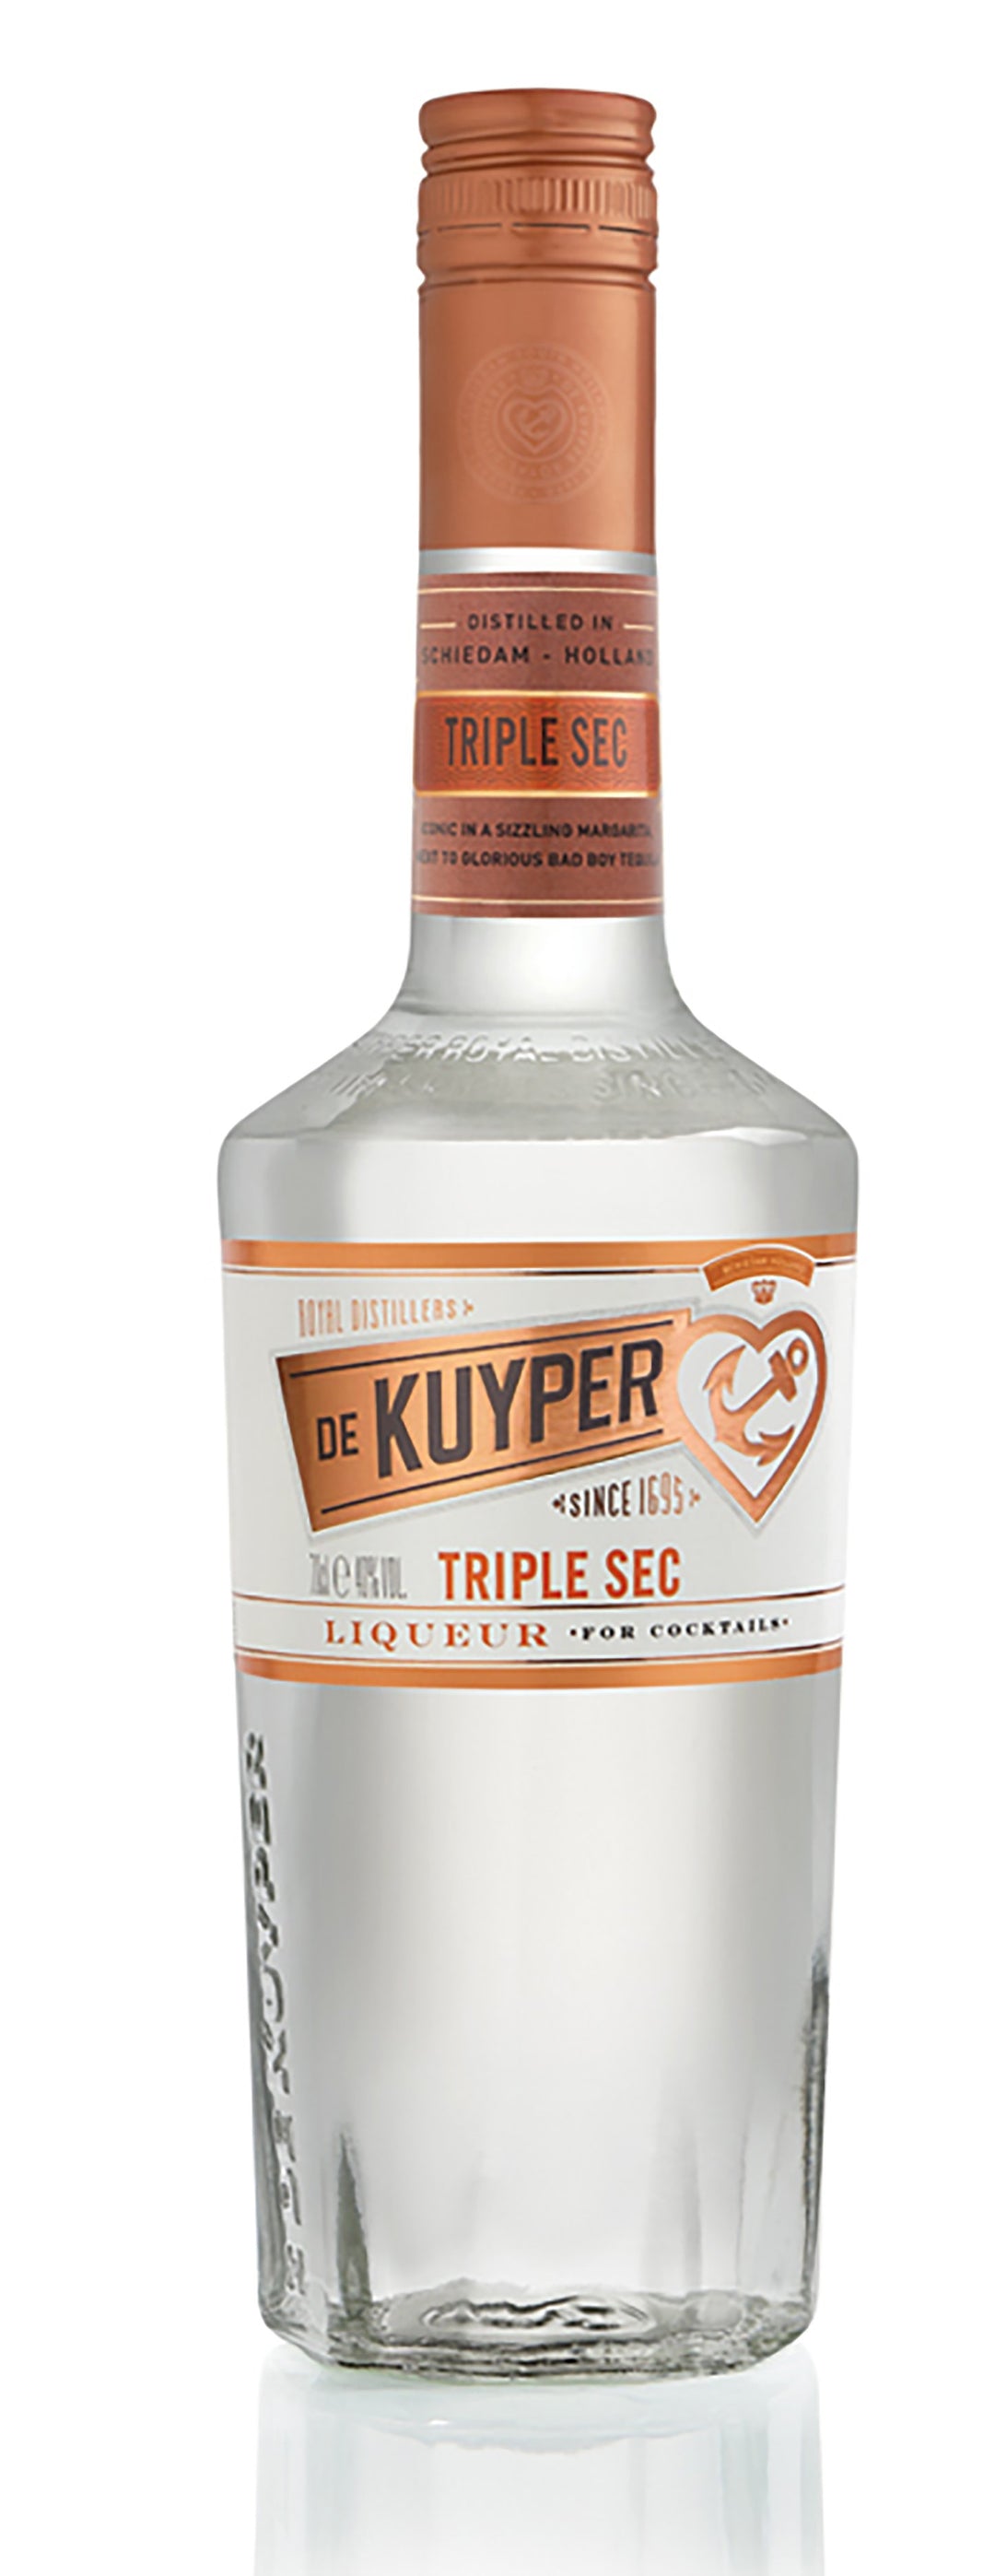 De kuyper Tripple Sec 700ml - Liquor Library